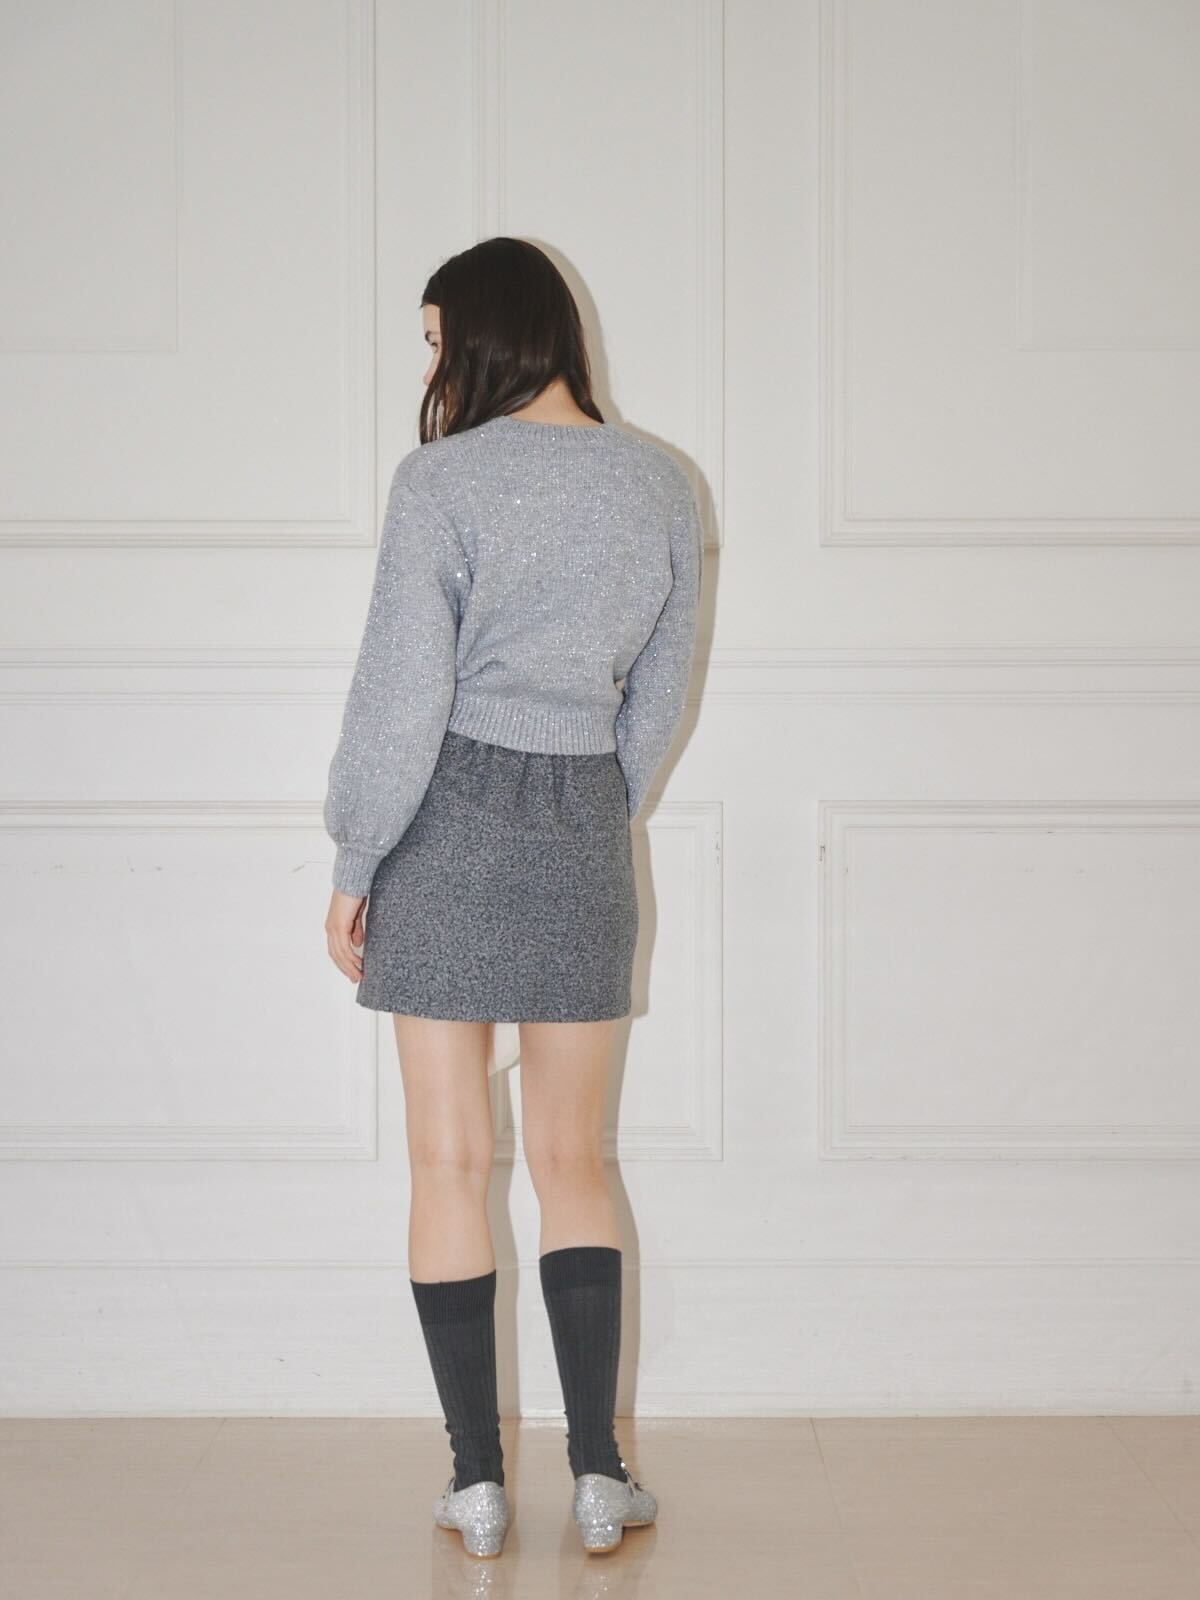 piping wool mini skirt